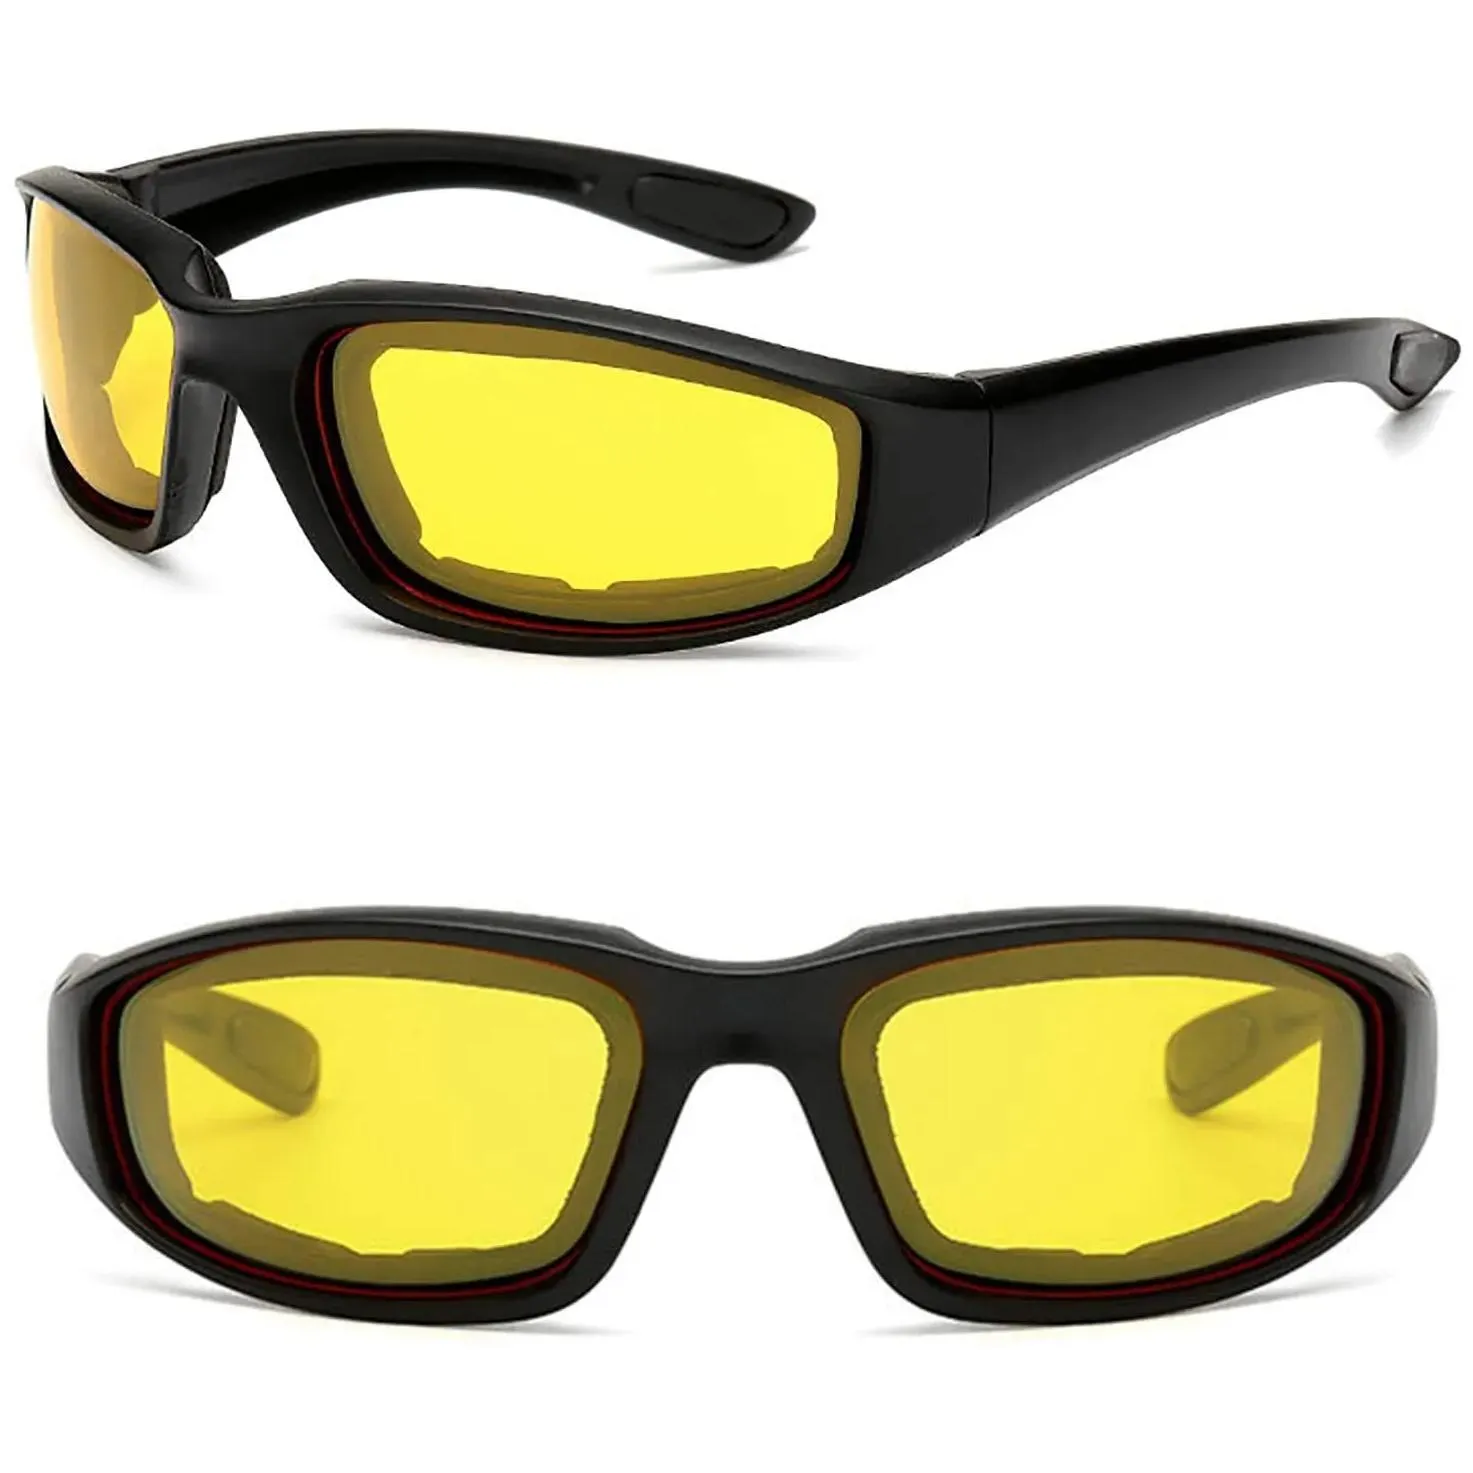 Outdoor Eyewear Fashionable Motorcycle Glasses Racing Anti-Glare Windproof Vintage Men Women Safety Eyeglasses Sunglasses Eye Drop De Dhvli